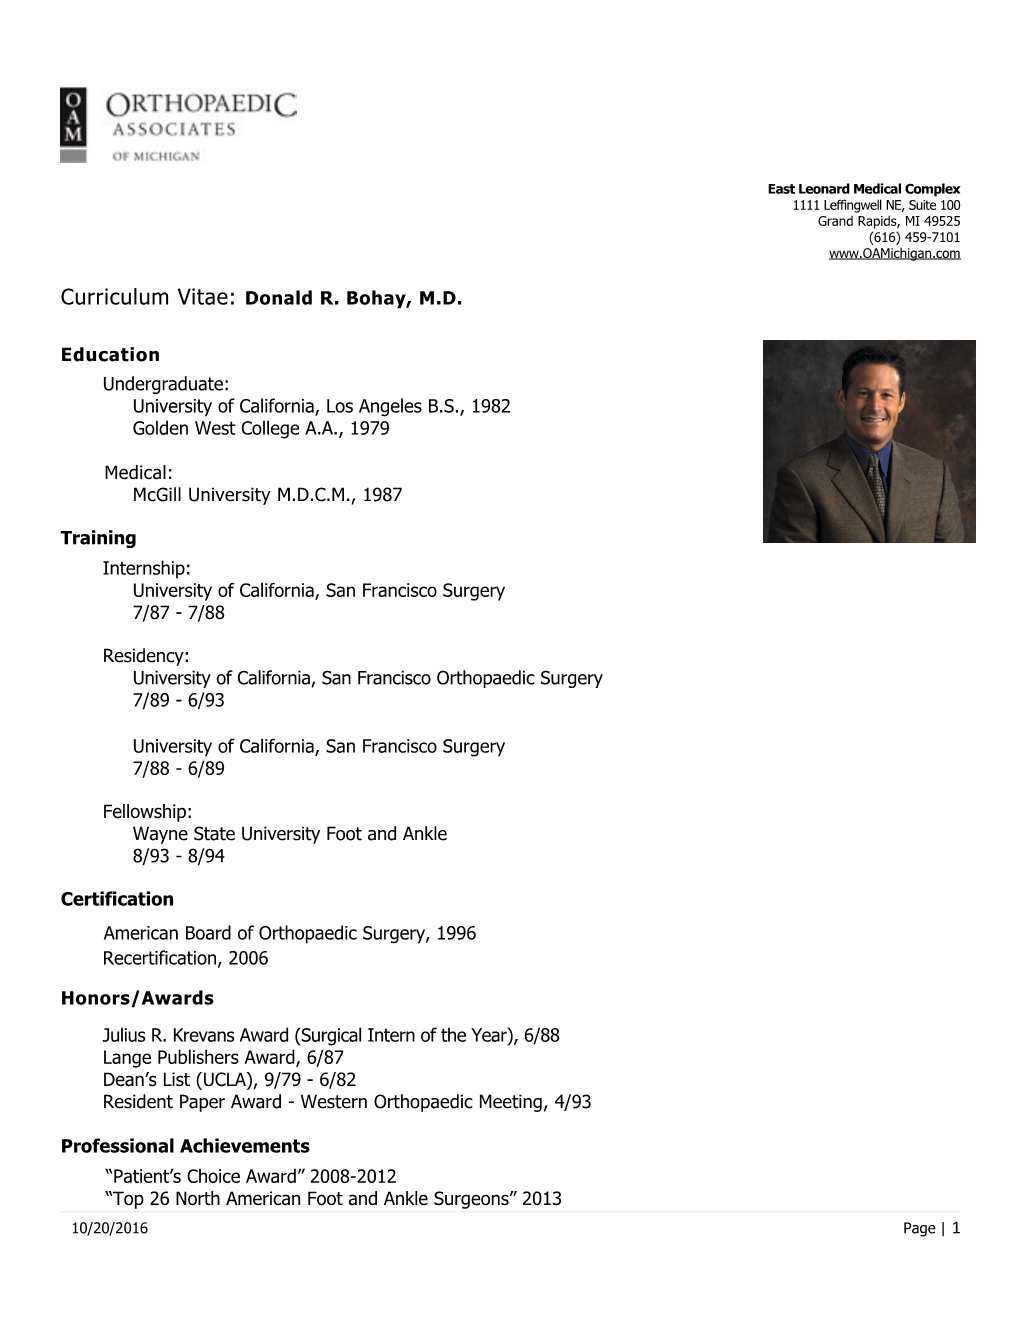 Curriculum Vitae: Donald R. Bohay, M.D